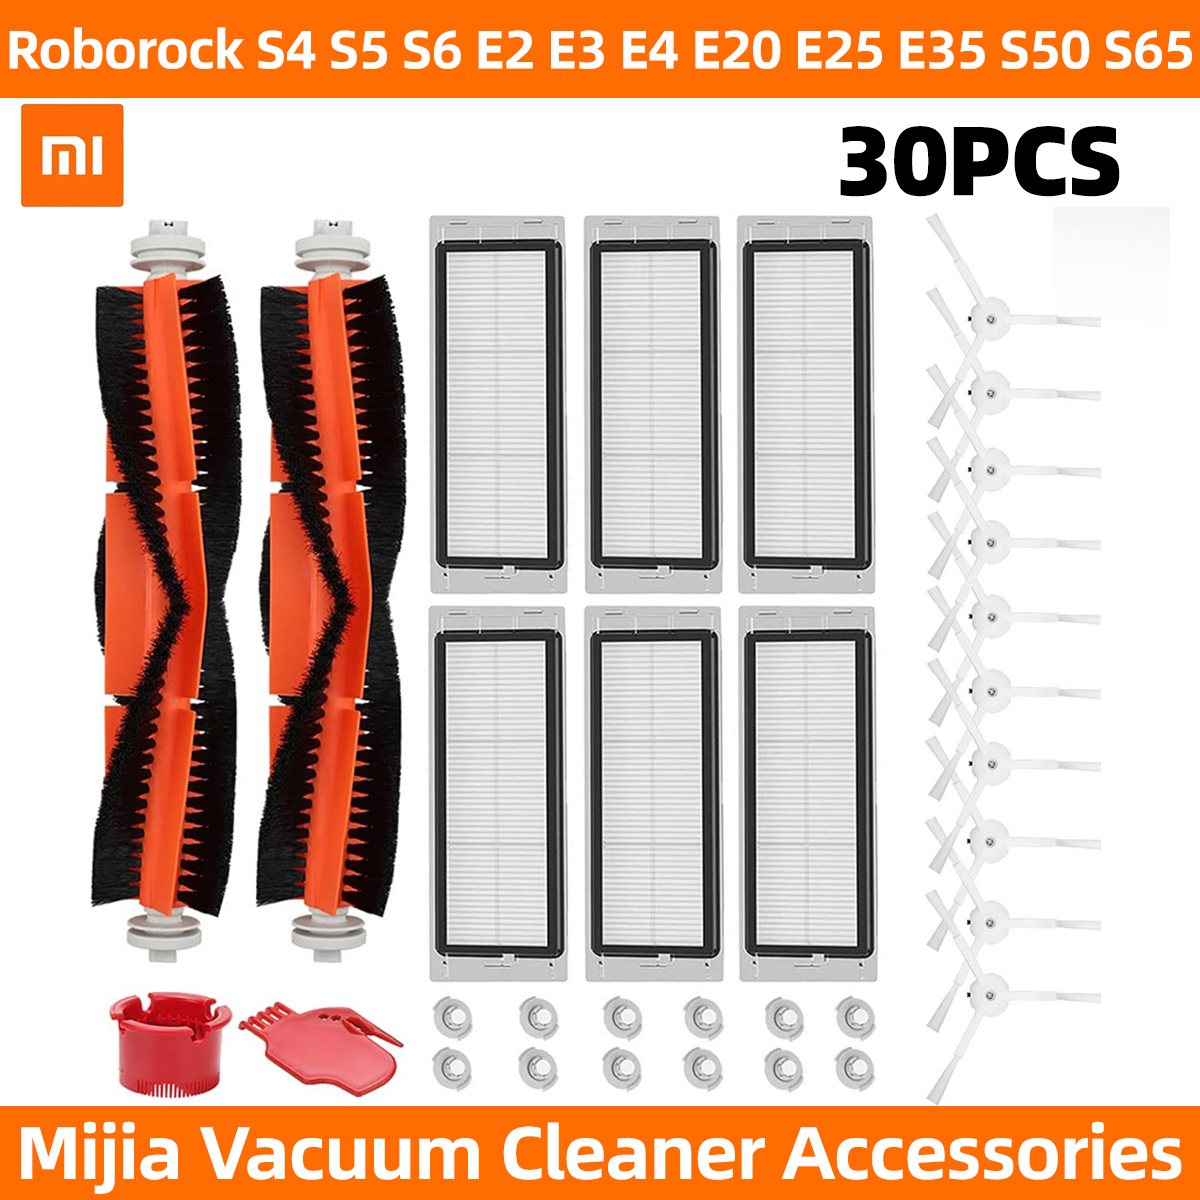 30pcs-Replacements-for-Roborock-S4-S5-S6-E2-E3-E4-E20-E25-E35-S50-S65-Robot-Vacuum-Cleaner-Main-Brus-1944162-1